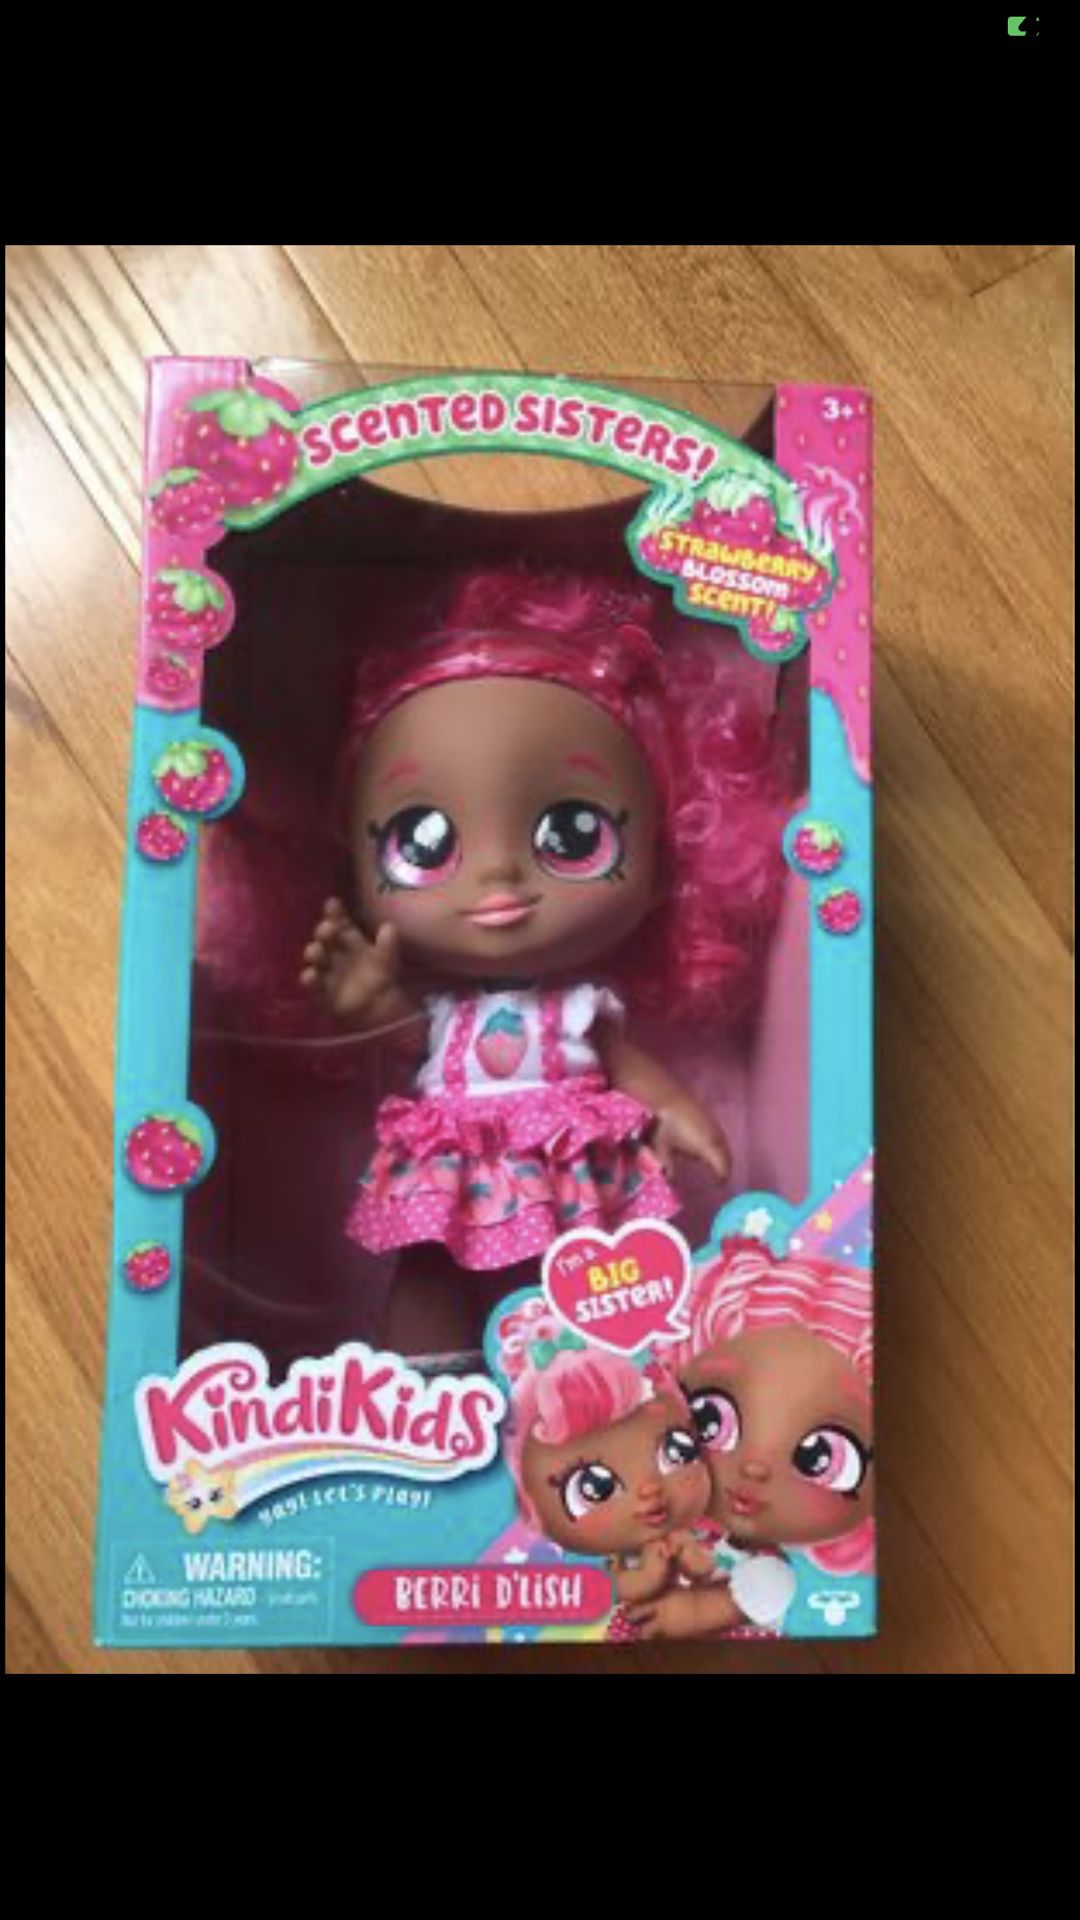 KindiKids Berri D’Lish Play Doll. Great for Birthday/Holiday Gift!